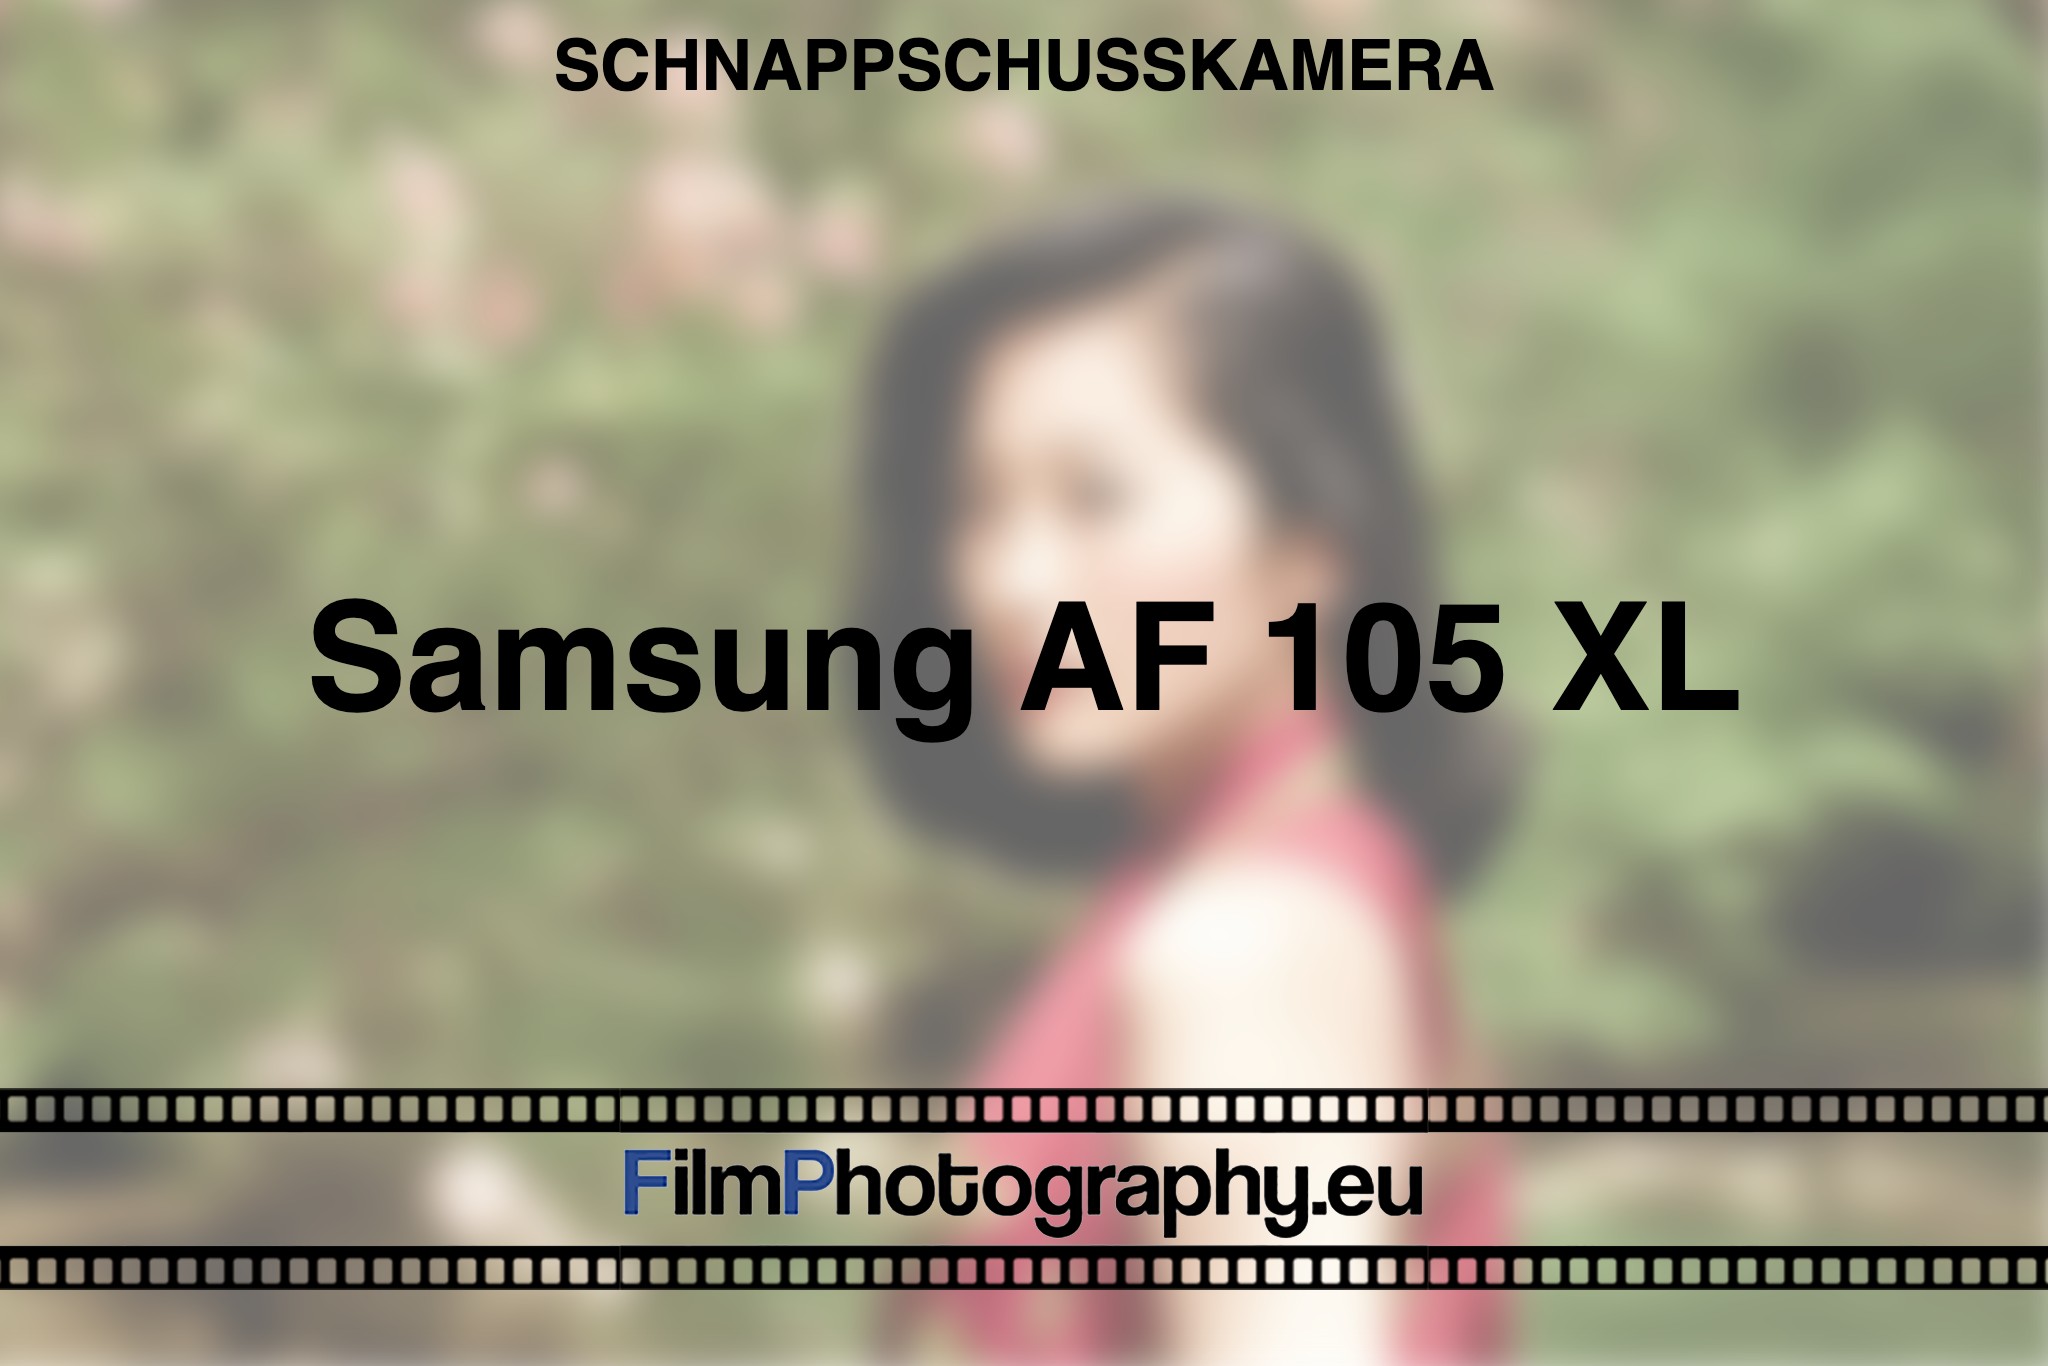 samsung-af-105-xl-schnappschusskamera-bnv